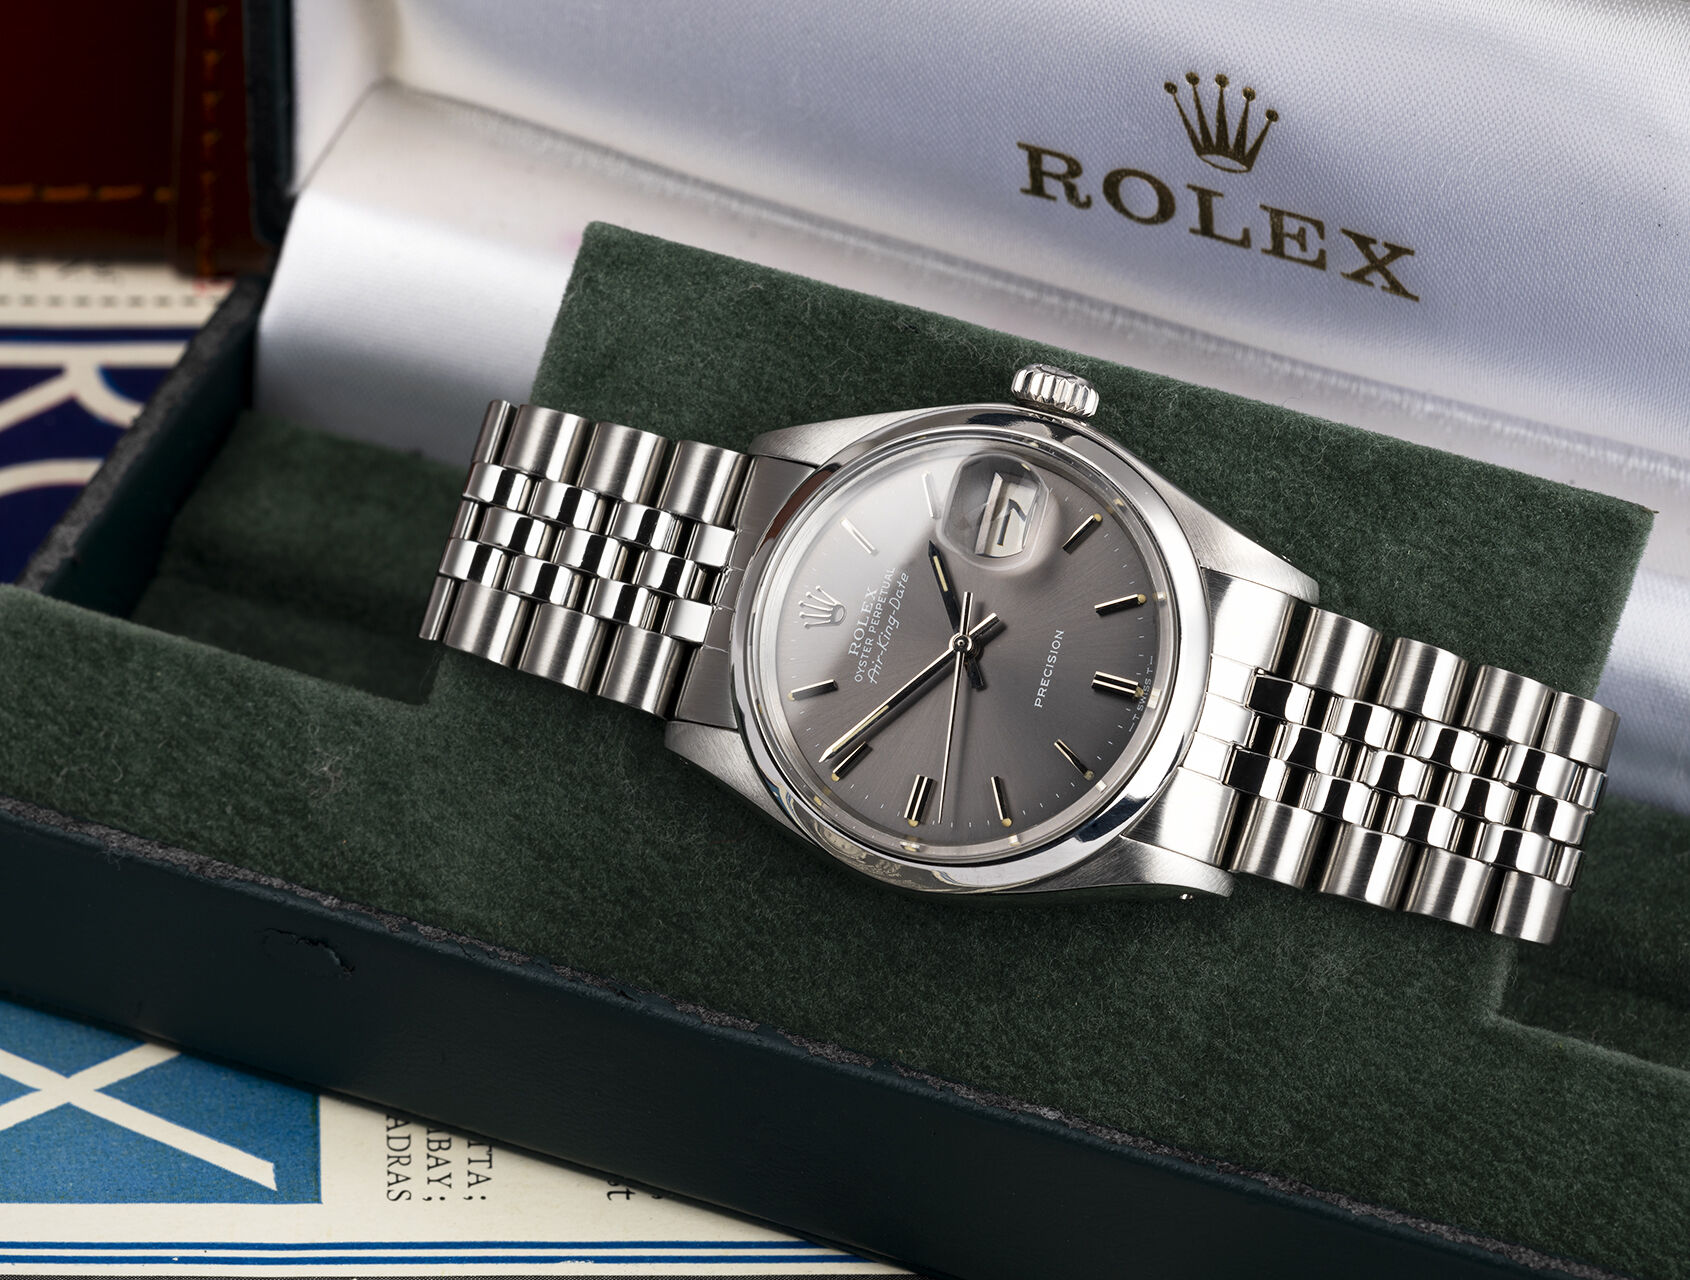 ref 5700 | 5700 - Plexiglas | Rolex Air-King Date